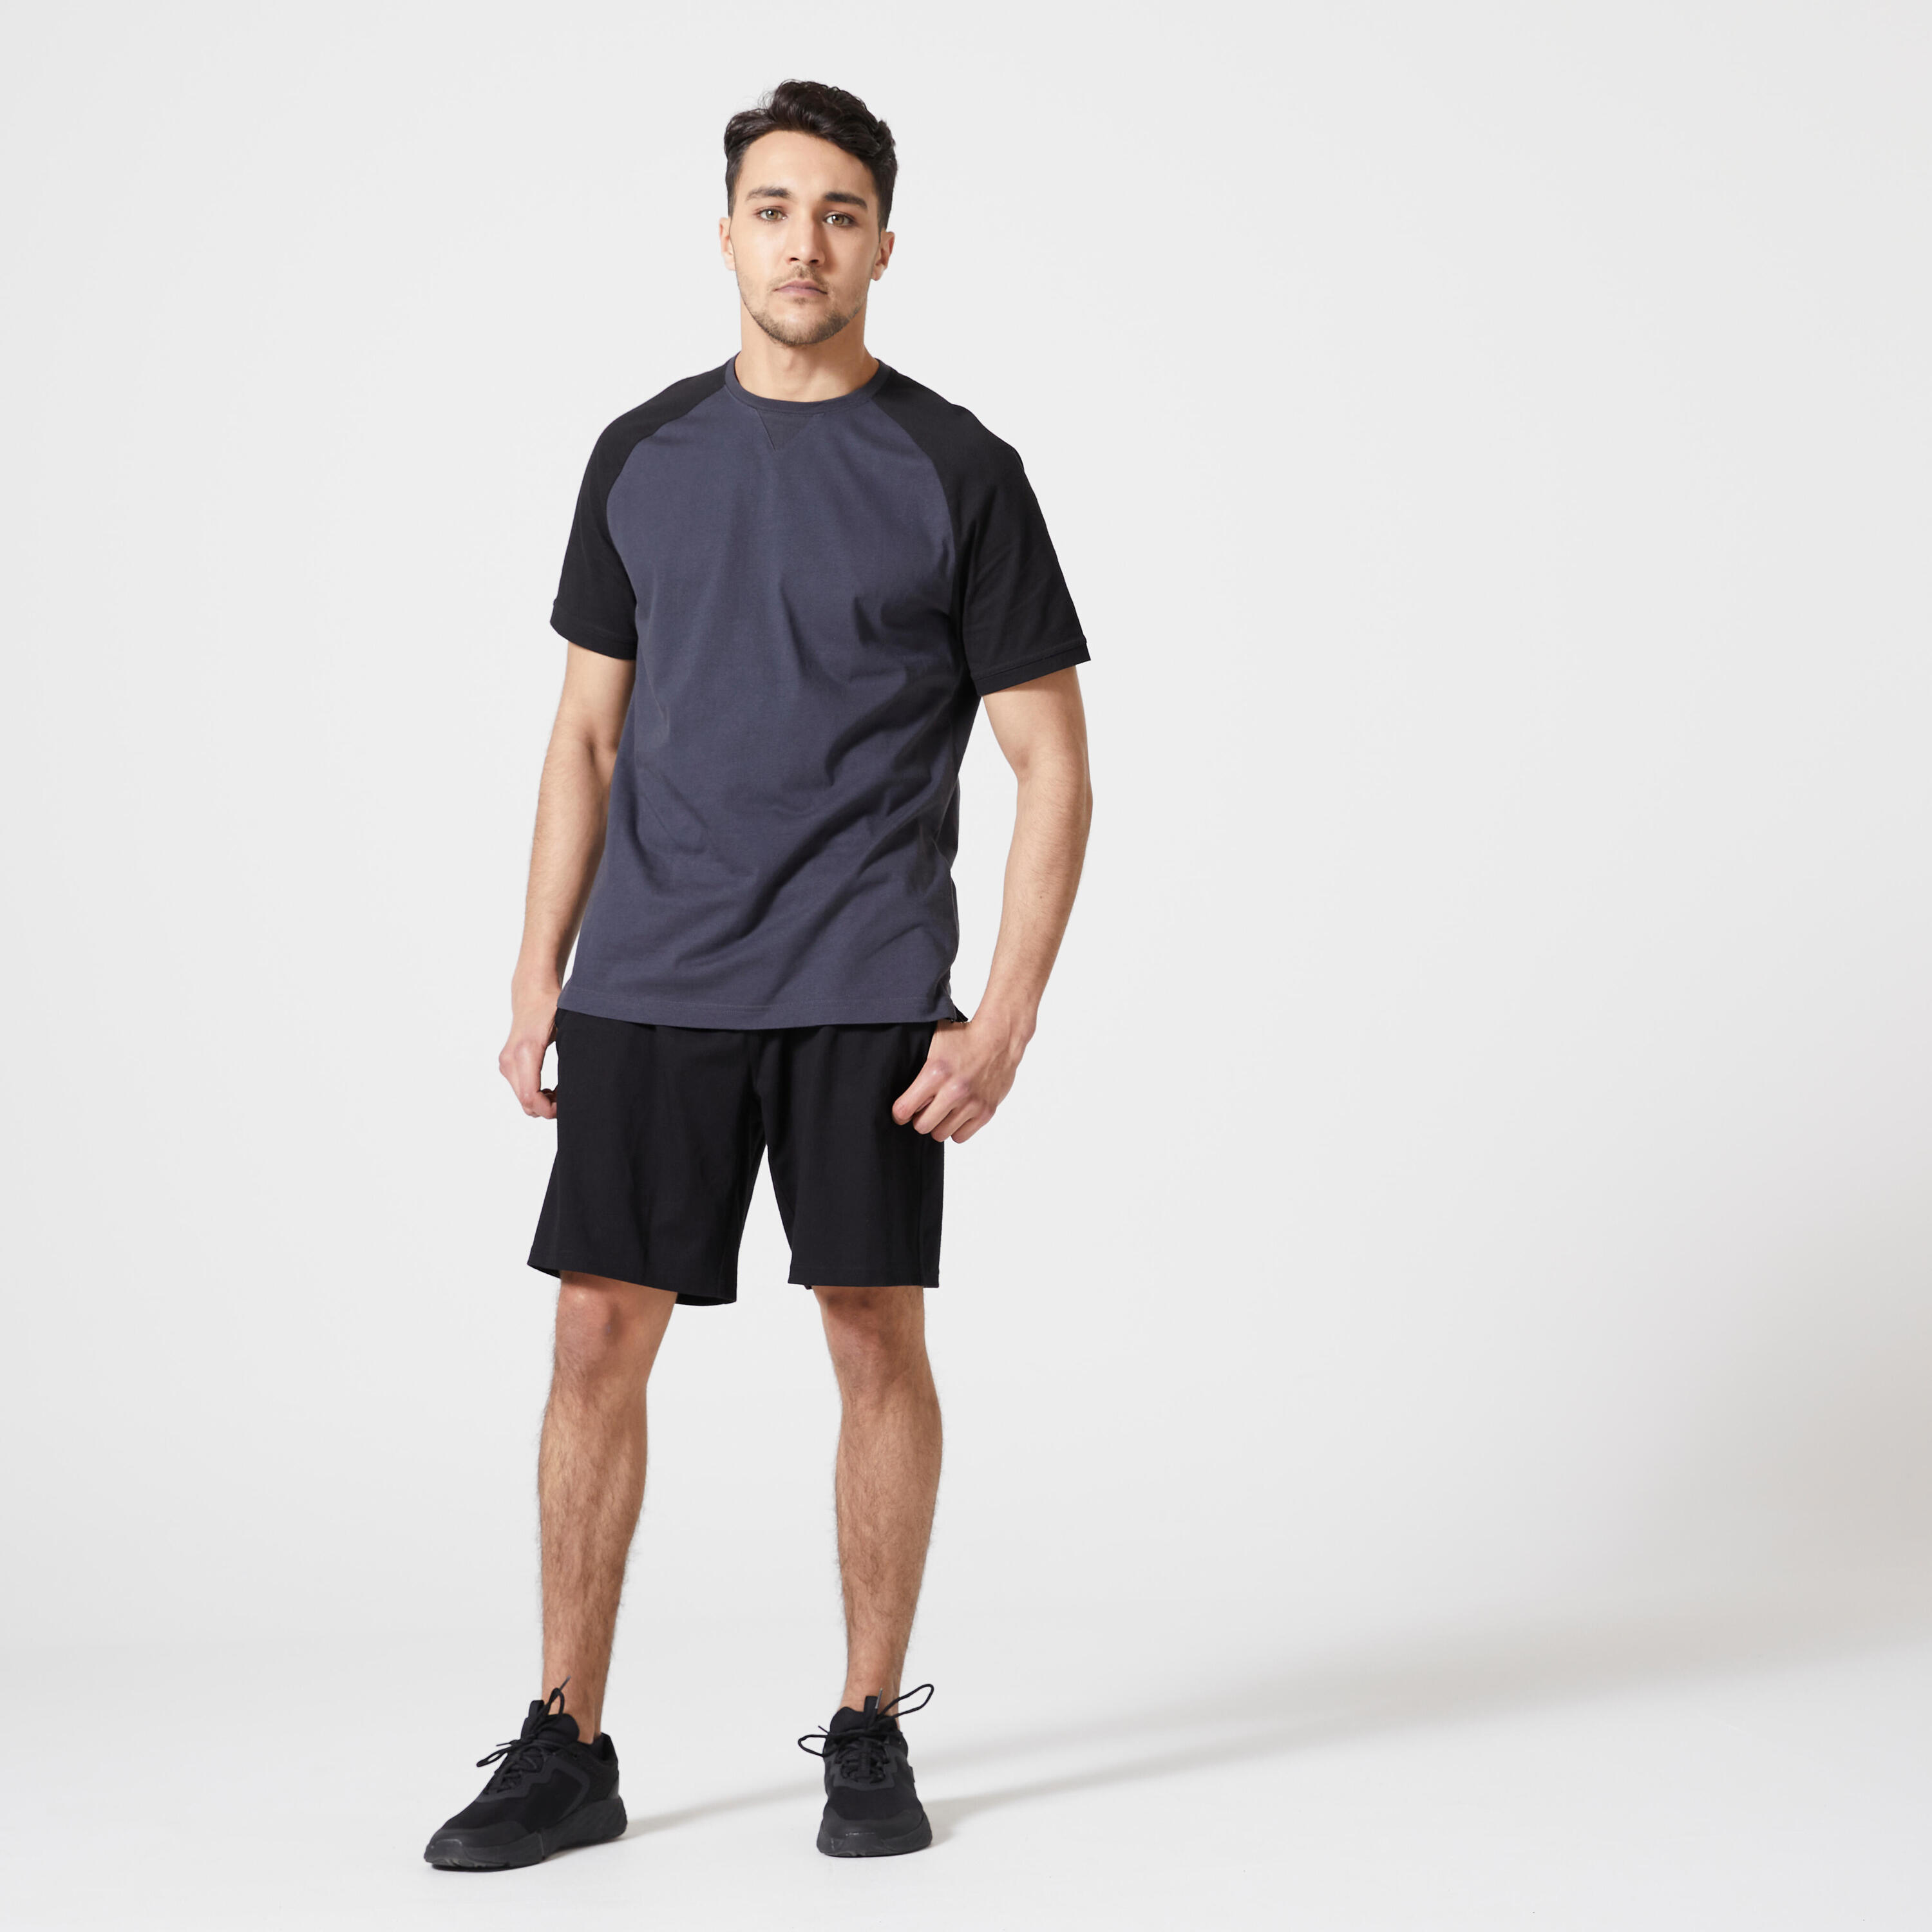 Men's Fitness T-Shirt 520 - Grey/Black 2/5